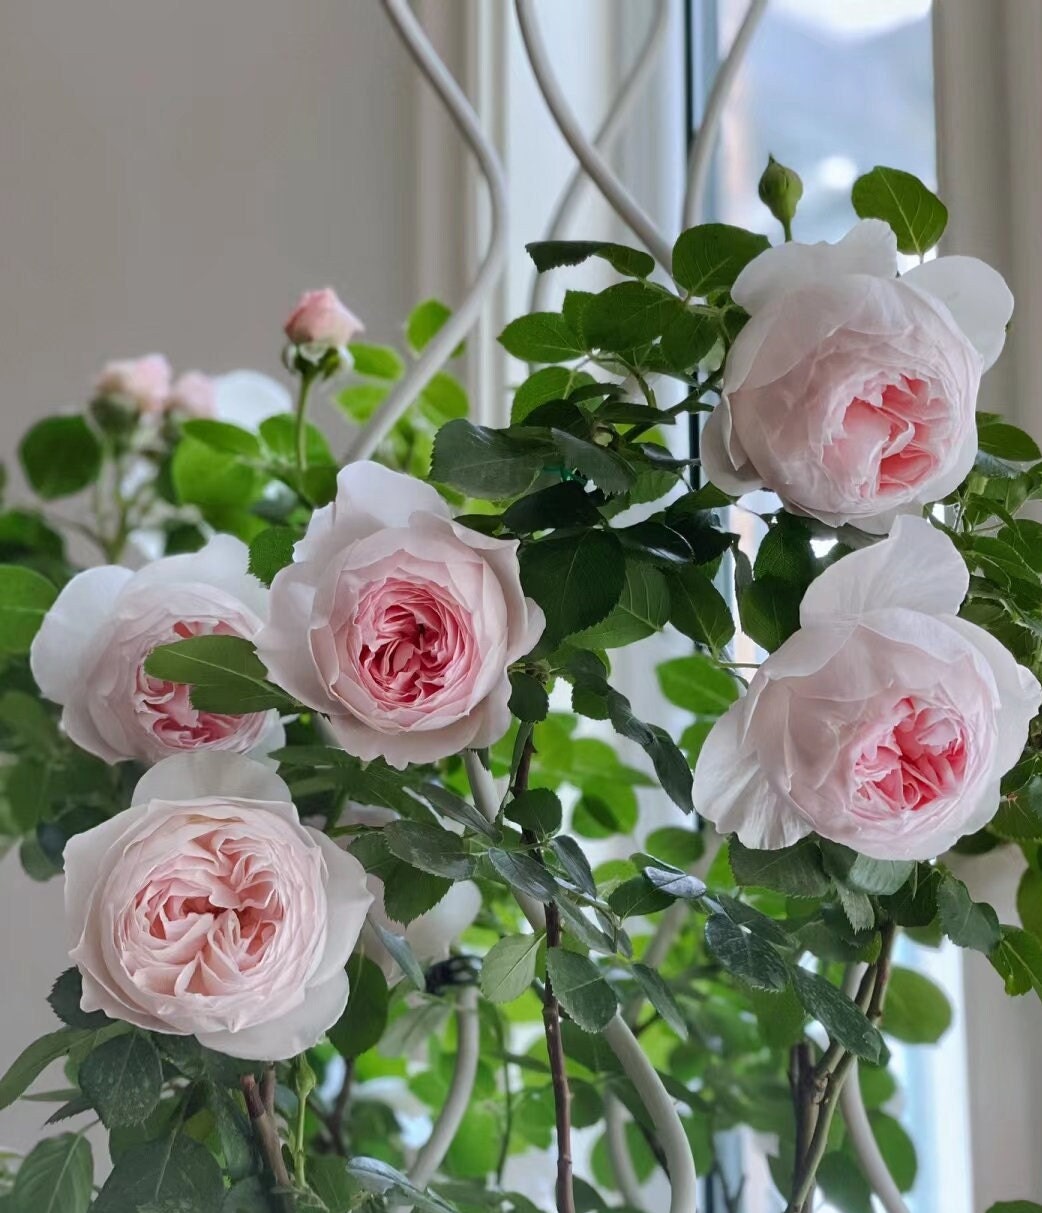 Rose 'Herzogin Christiana' (尘世天使) (2 Gal+ Live Plant) Shrub Rose